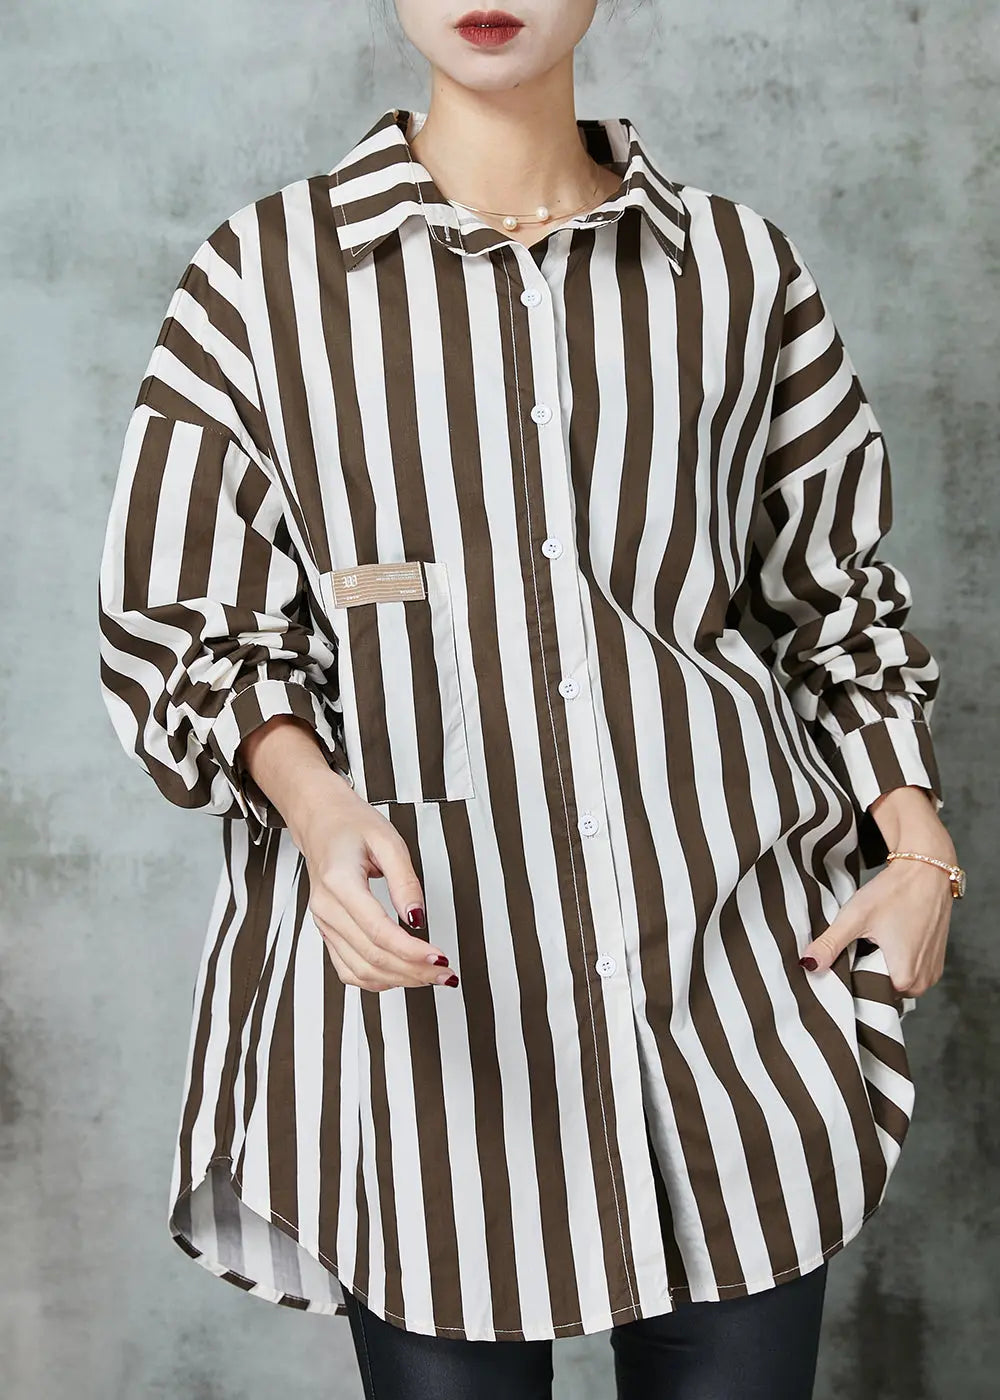 Chic Khaki Oversized Striped Cotton Shirt Tops Spring JK1001 Ada Fashion